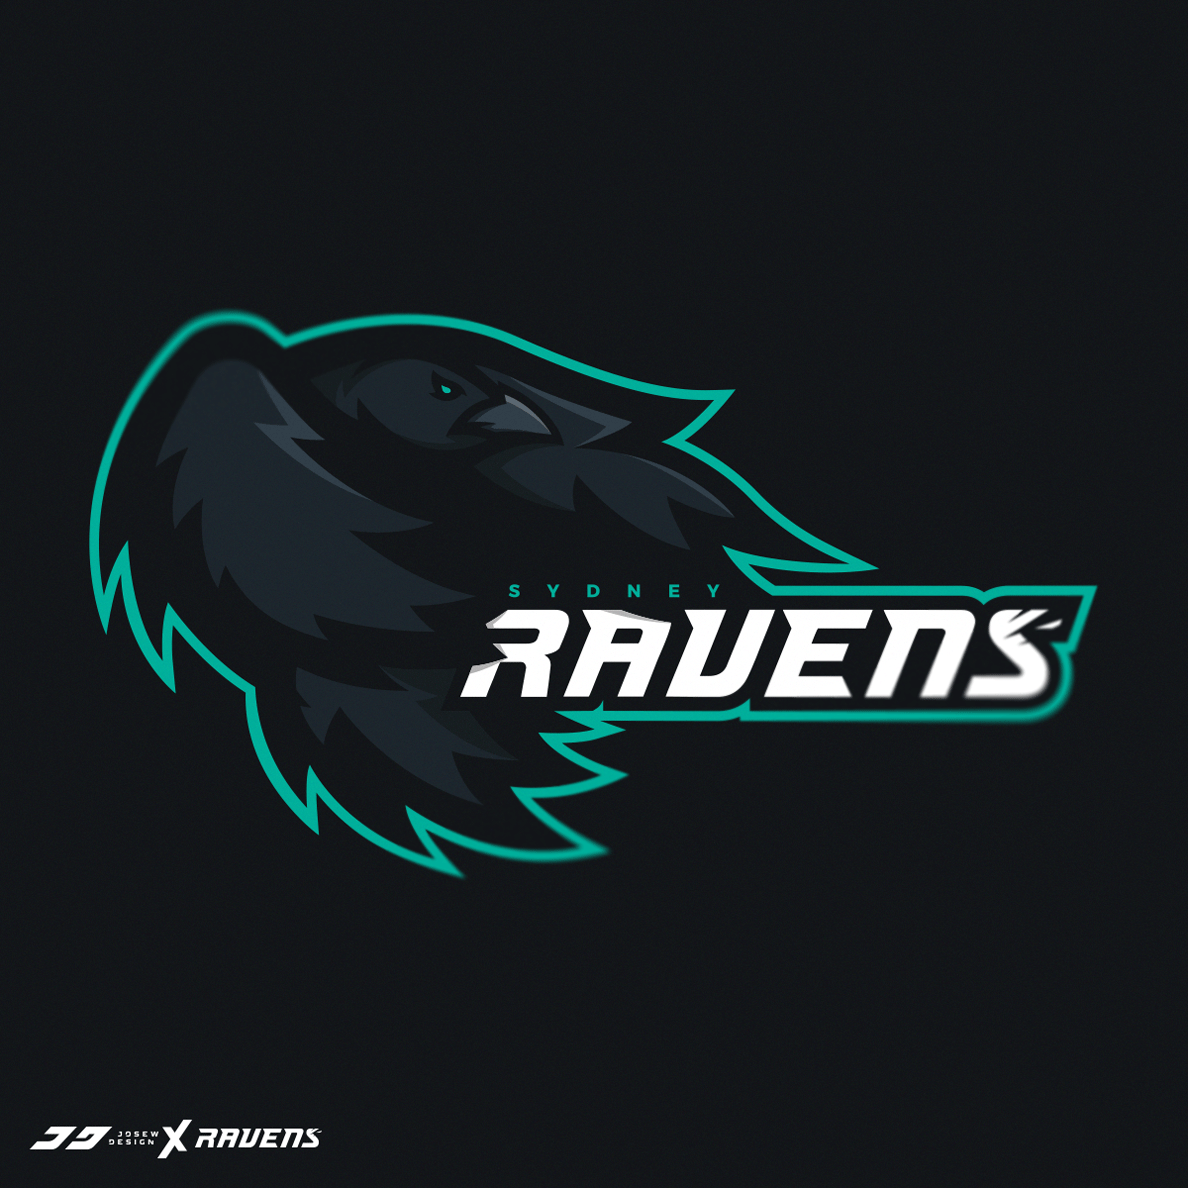 Crow Sports Logo - Sydney Ravens Mascot Logo. | Sports Logos | Pinterest | Logos ...